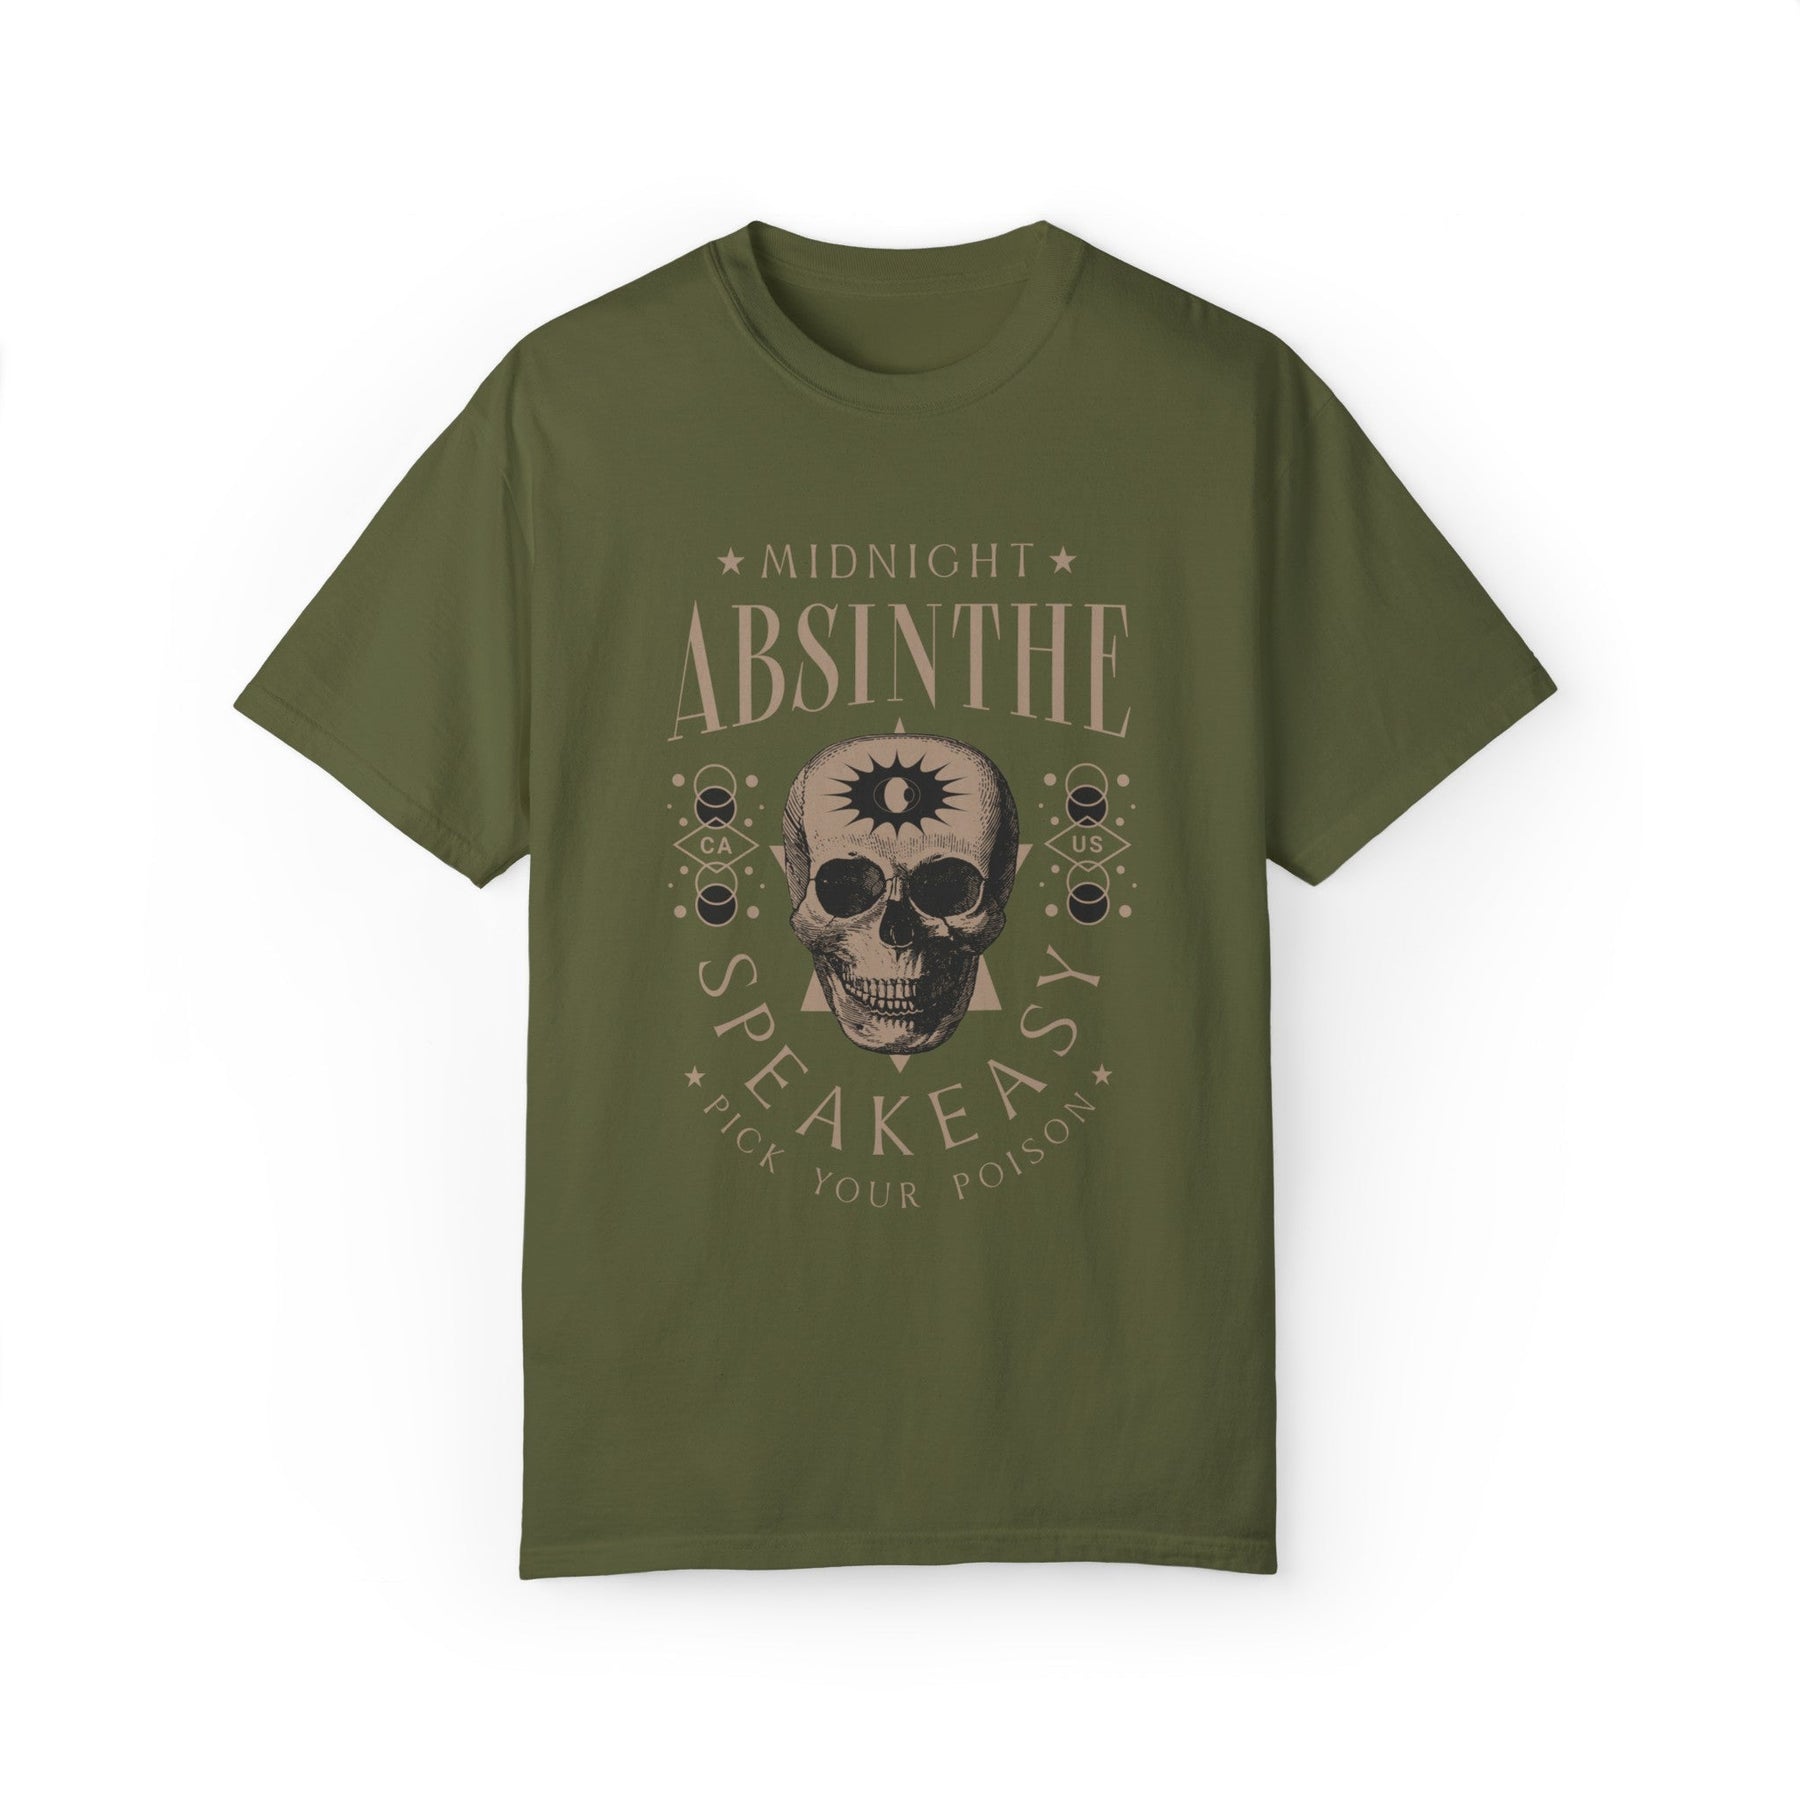 Midnight Absinthe Oversized Beefy Tee - Goth Cloth Co.T - Shirt33234888138295381657